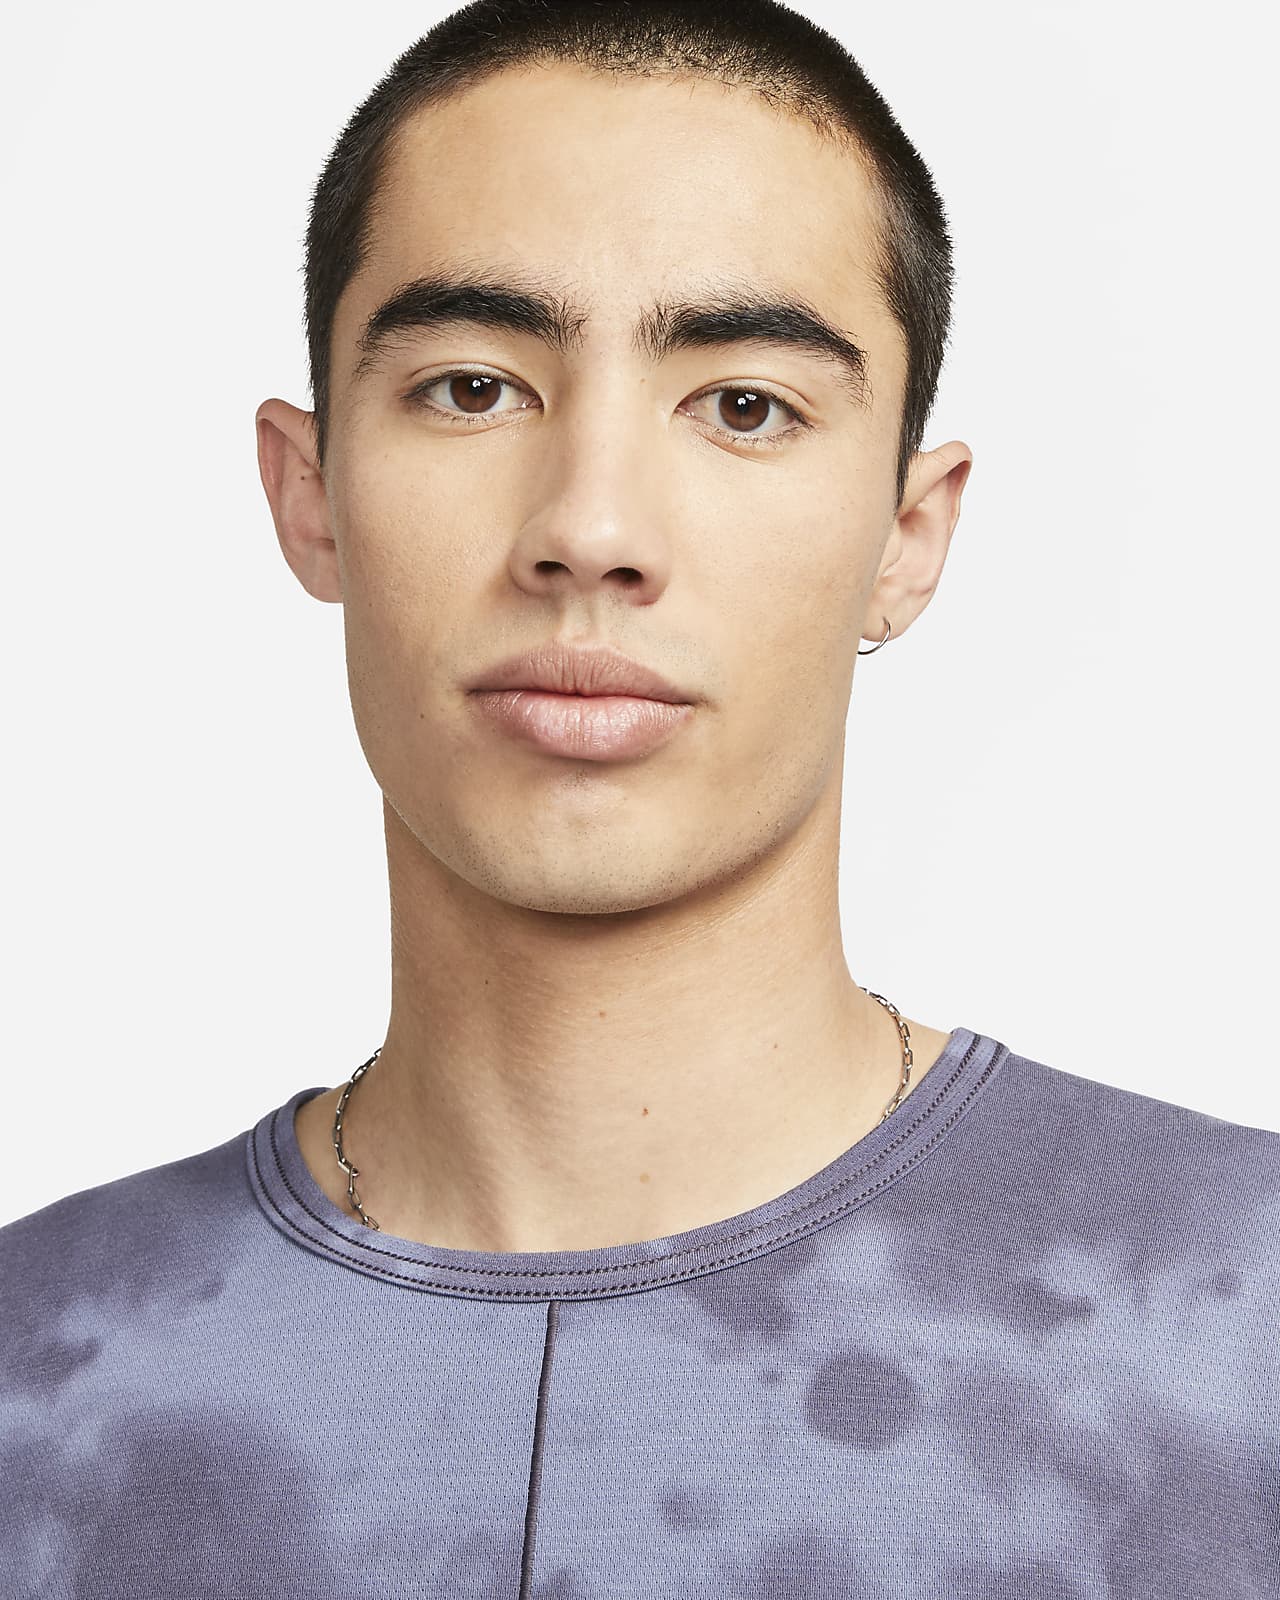 Nike Yoga Dri-FIT Men's Short-Sleeve Top - Asport